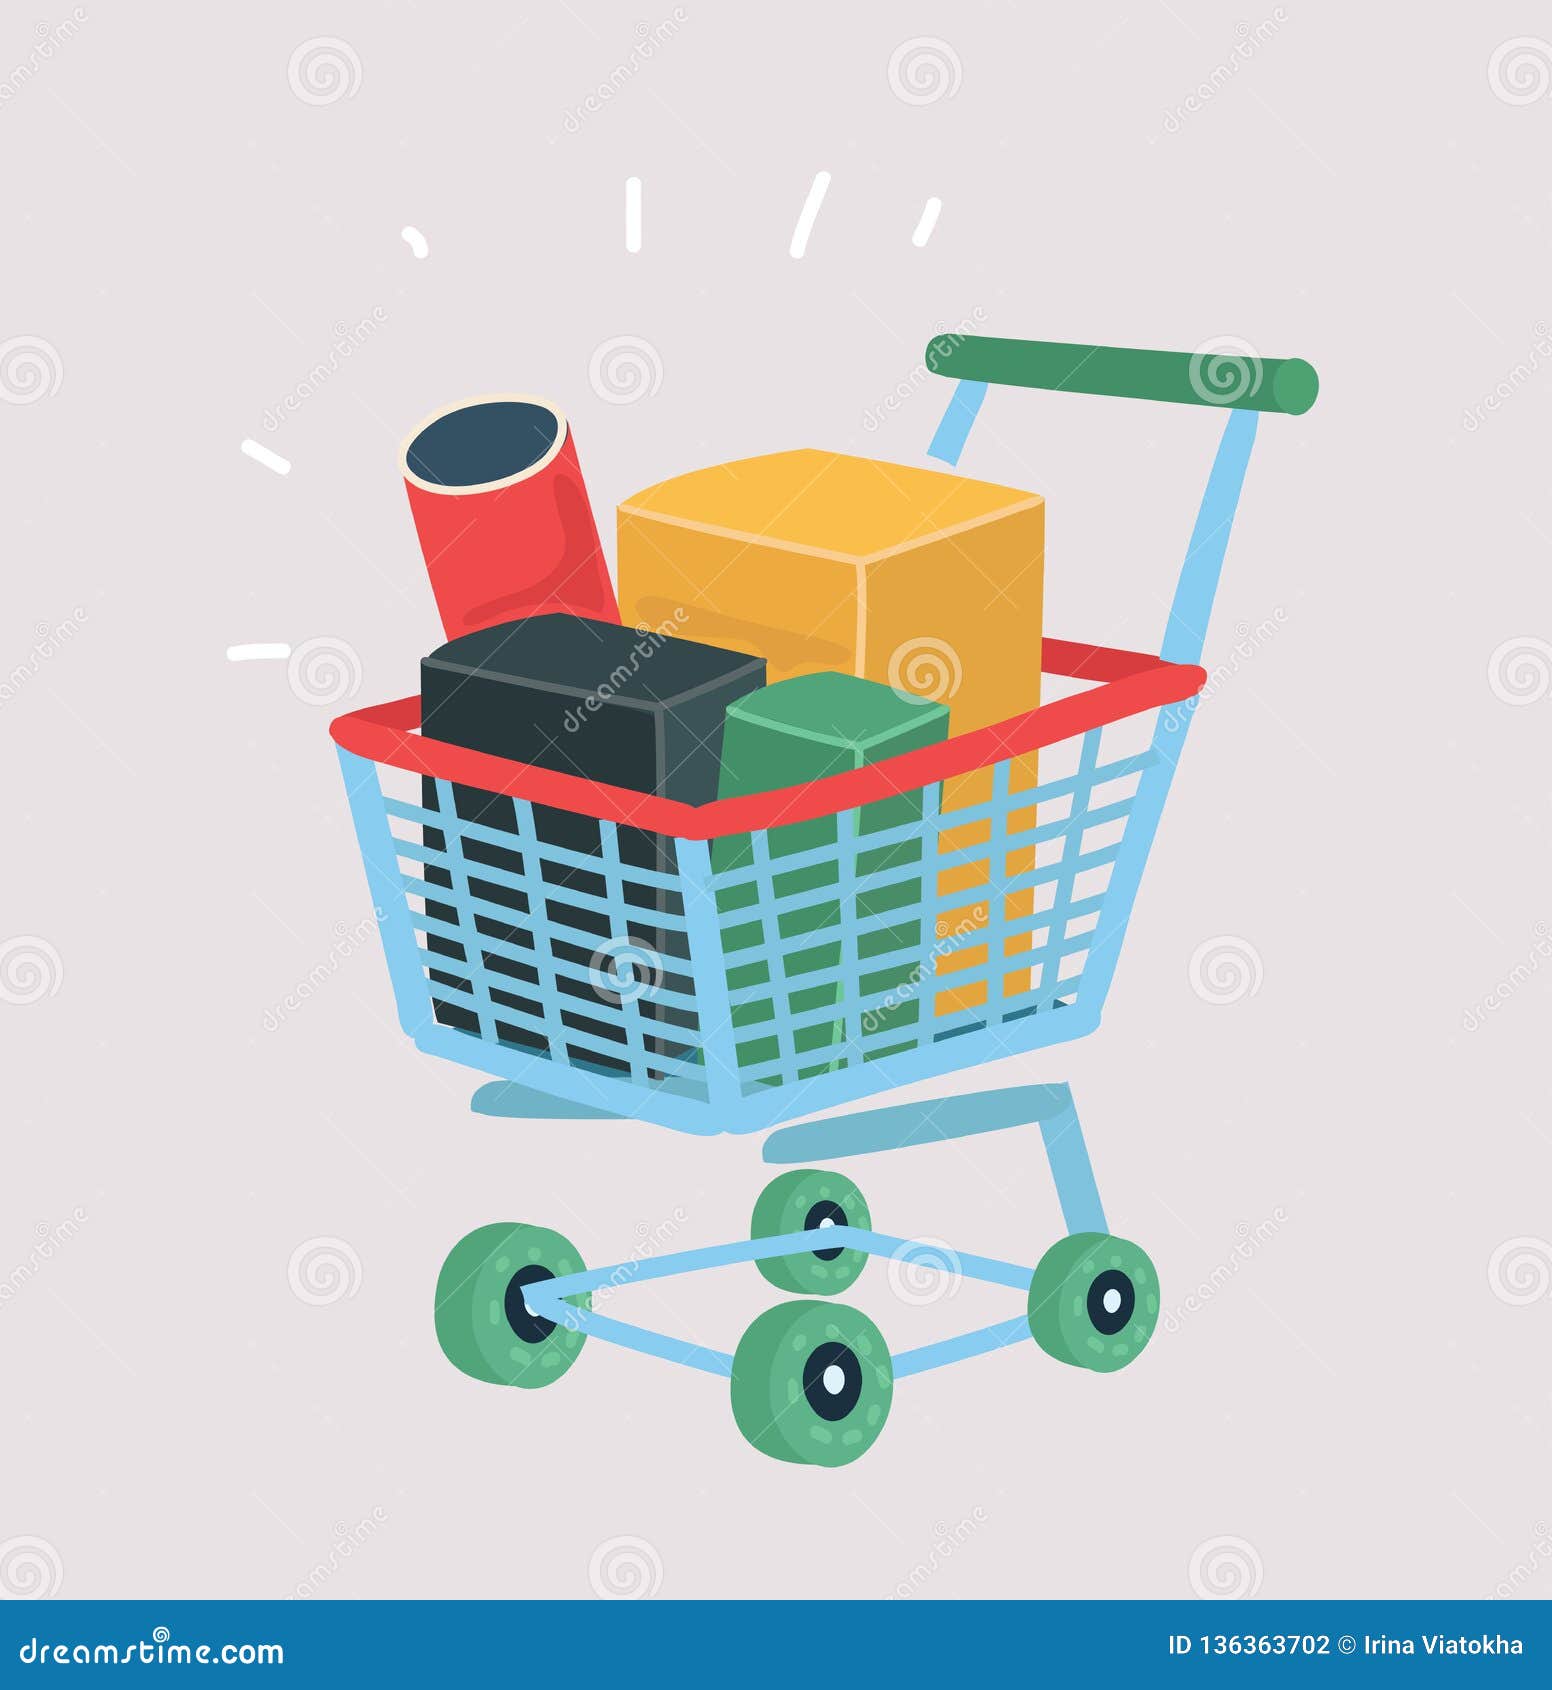 Supermarket shopping cart stock vector. Illustration of object - 136363702